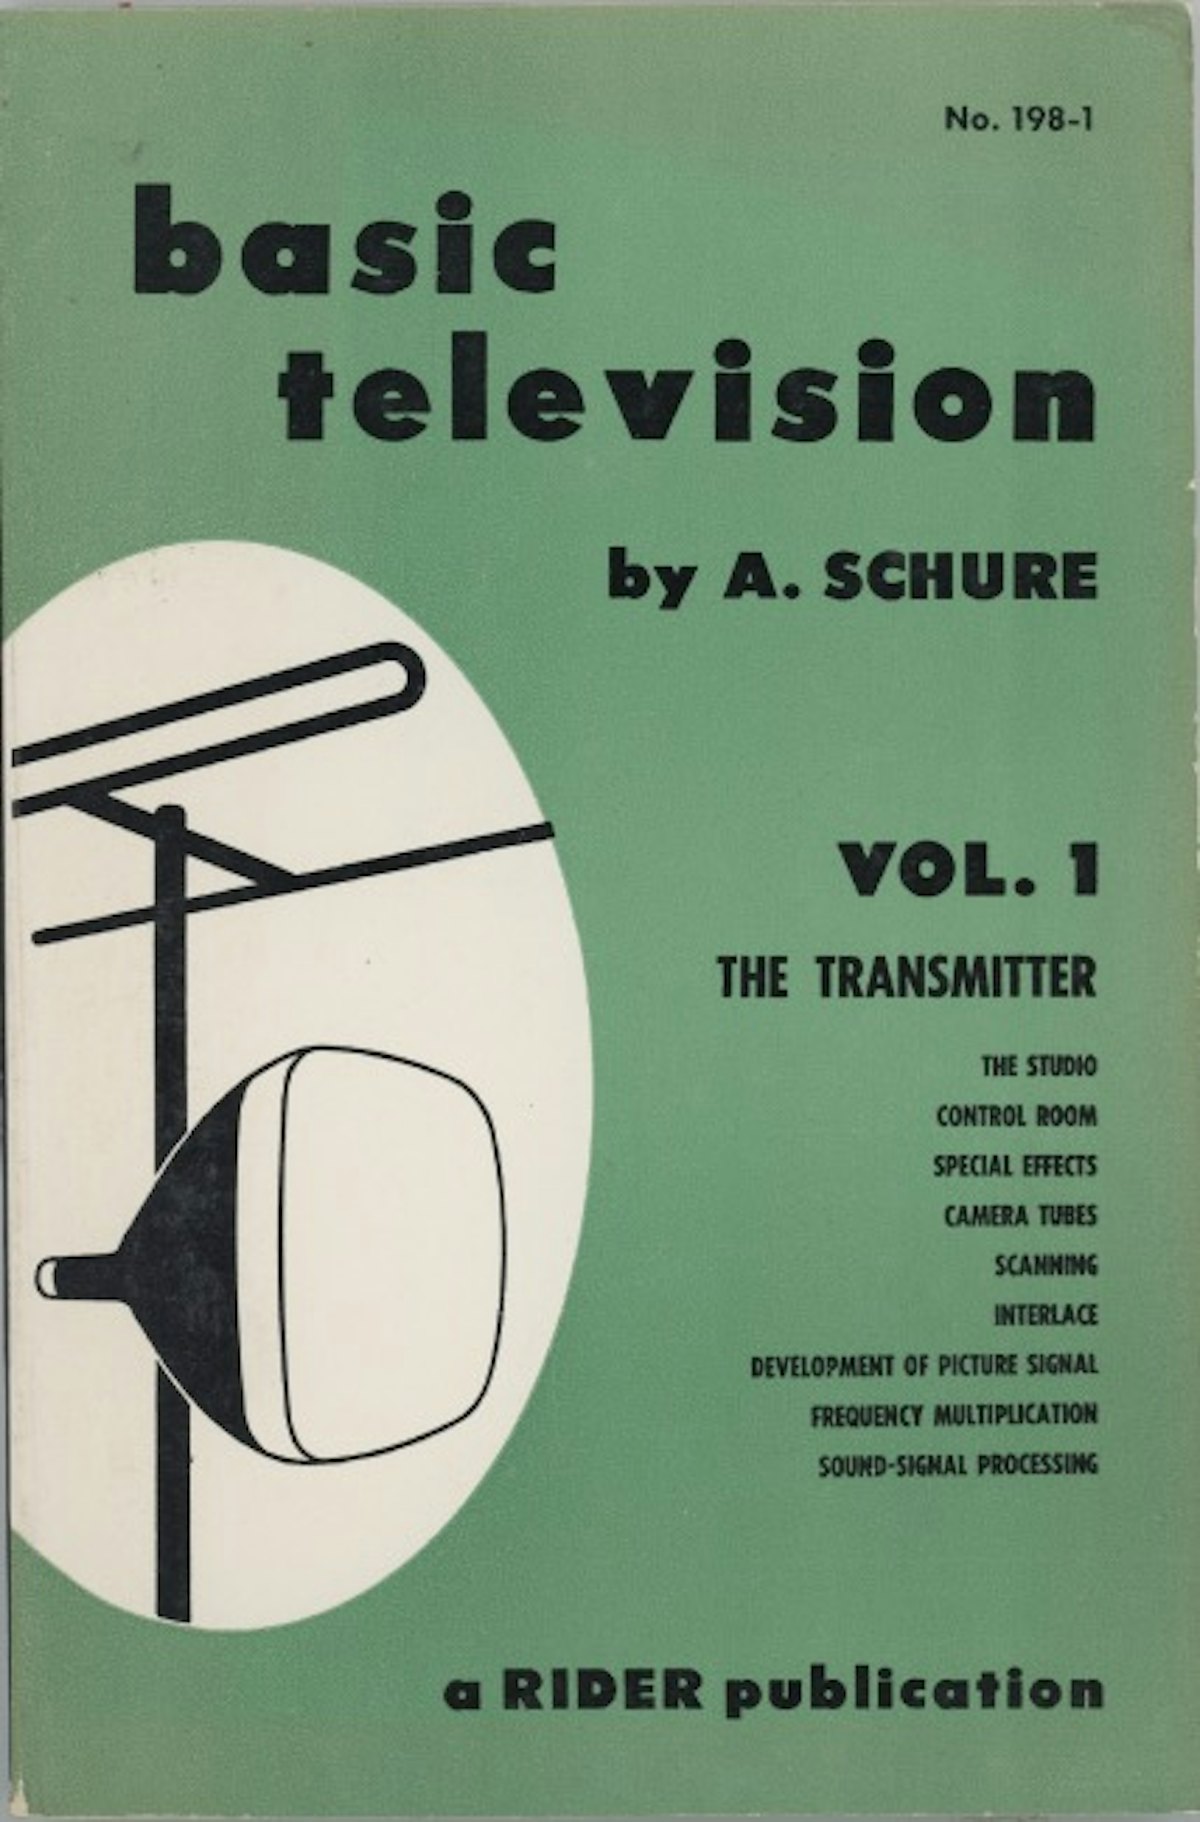 Basic Television Vol. 1 The Transmitter